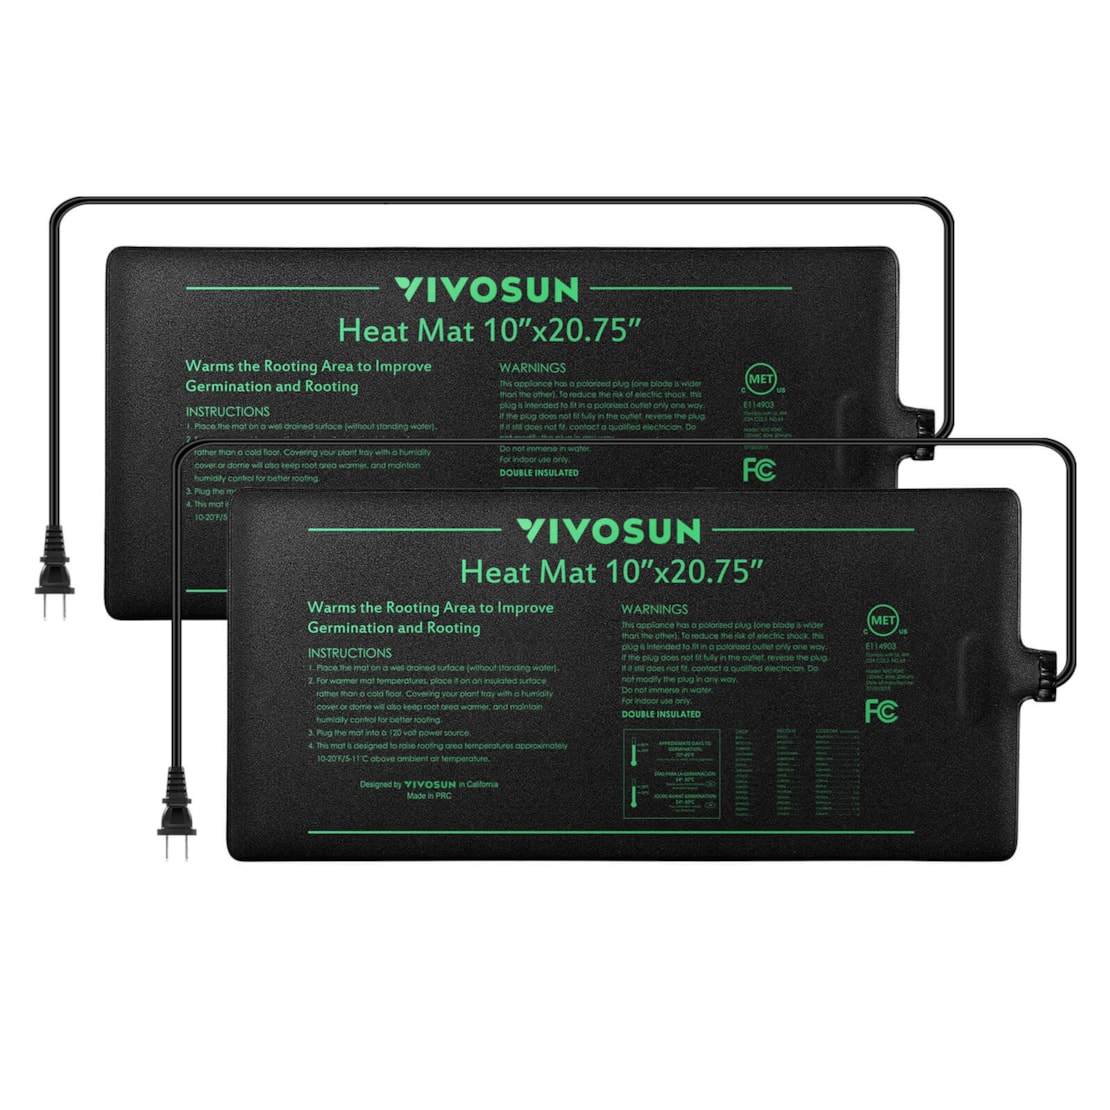 VIVOSUN Seedling Heat Mat 10" x 20.75" 2-Pack